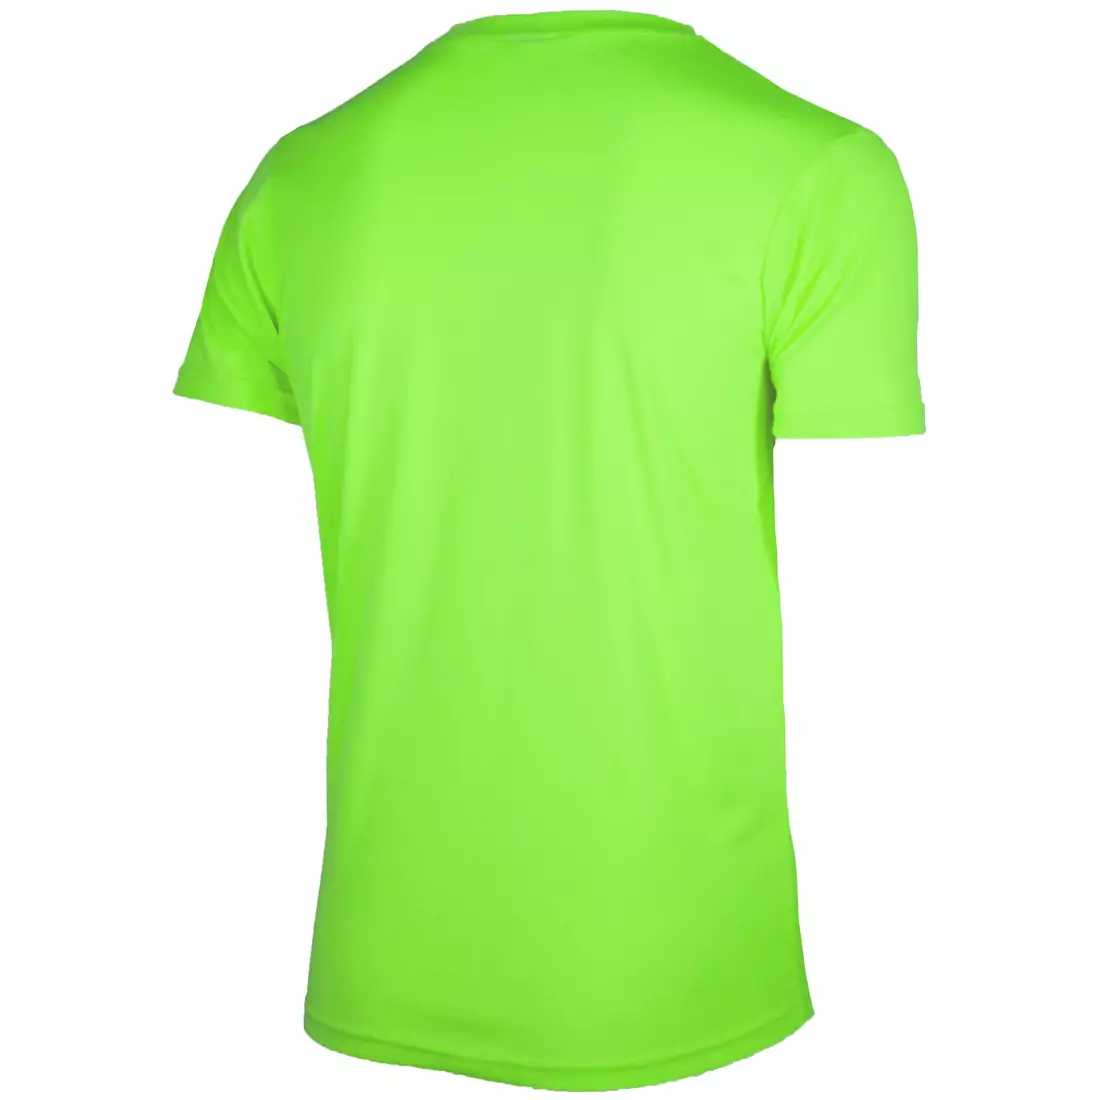 ROGELLI RUN PROMOTION pánska športová košeľa s krátkym rukávom, fluórovo zelené